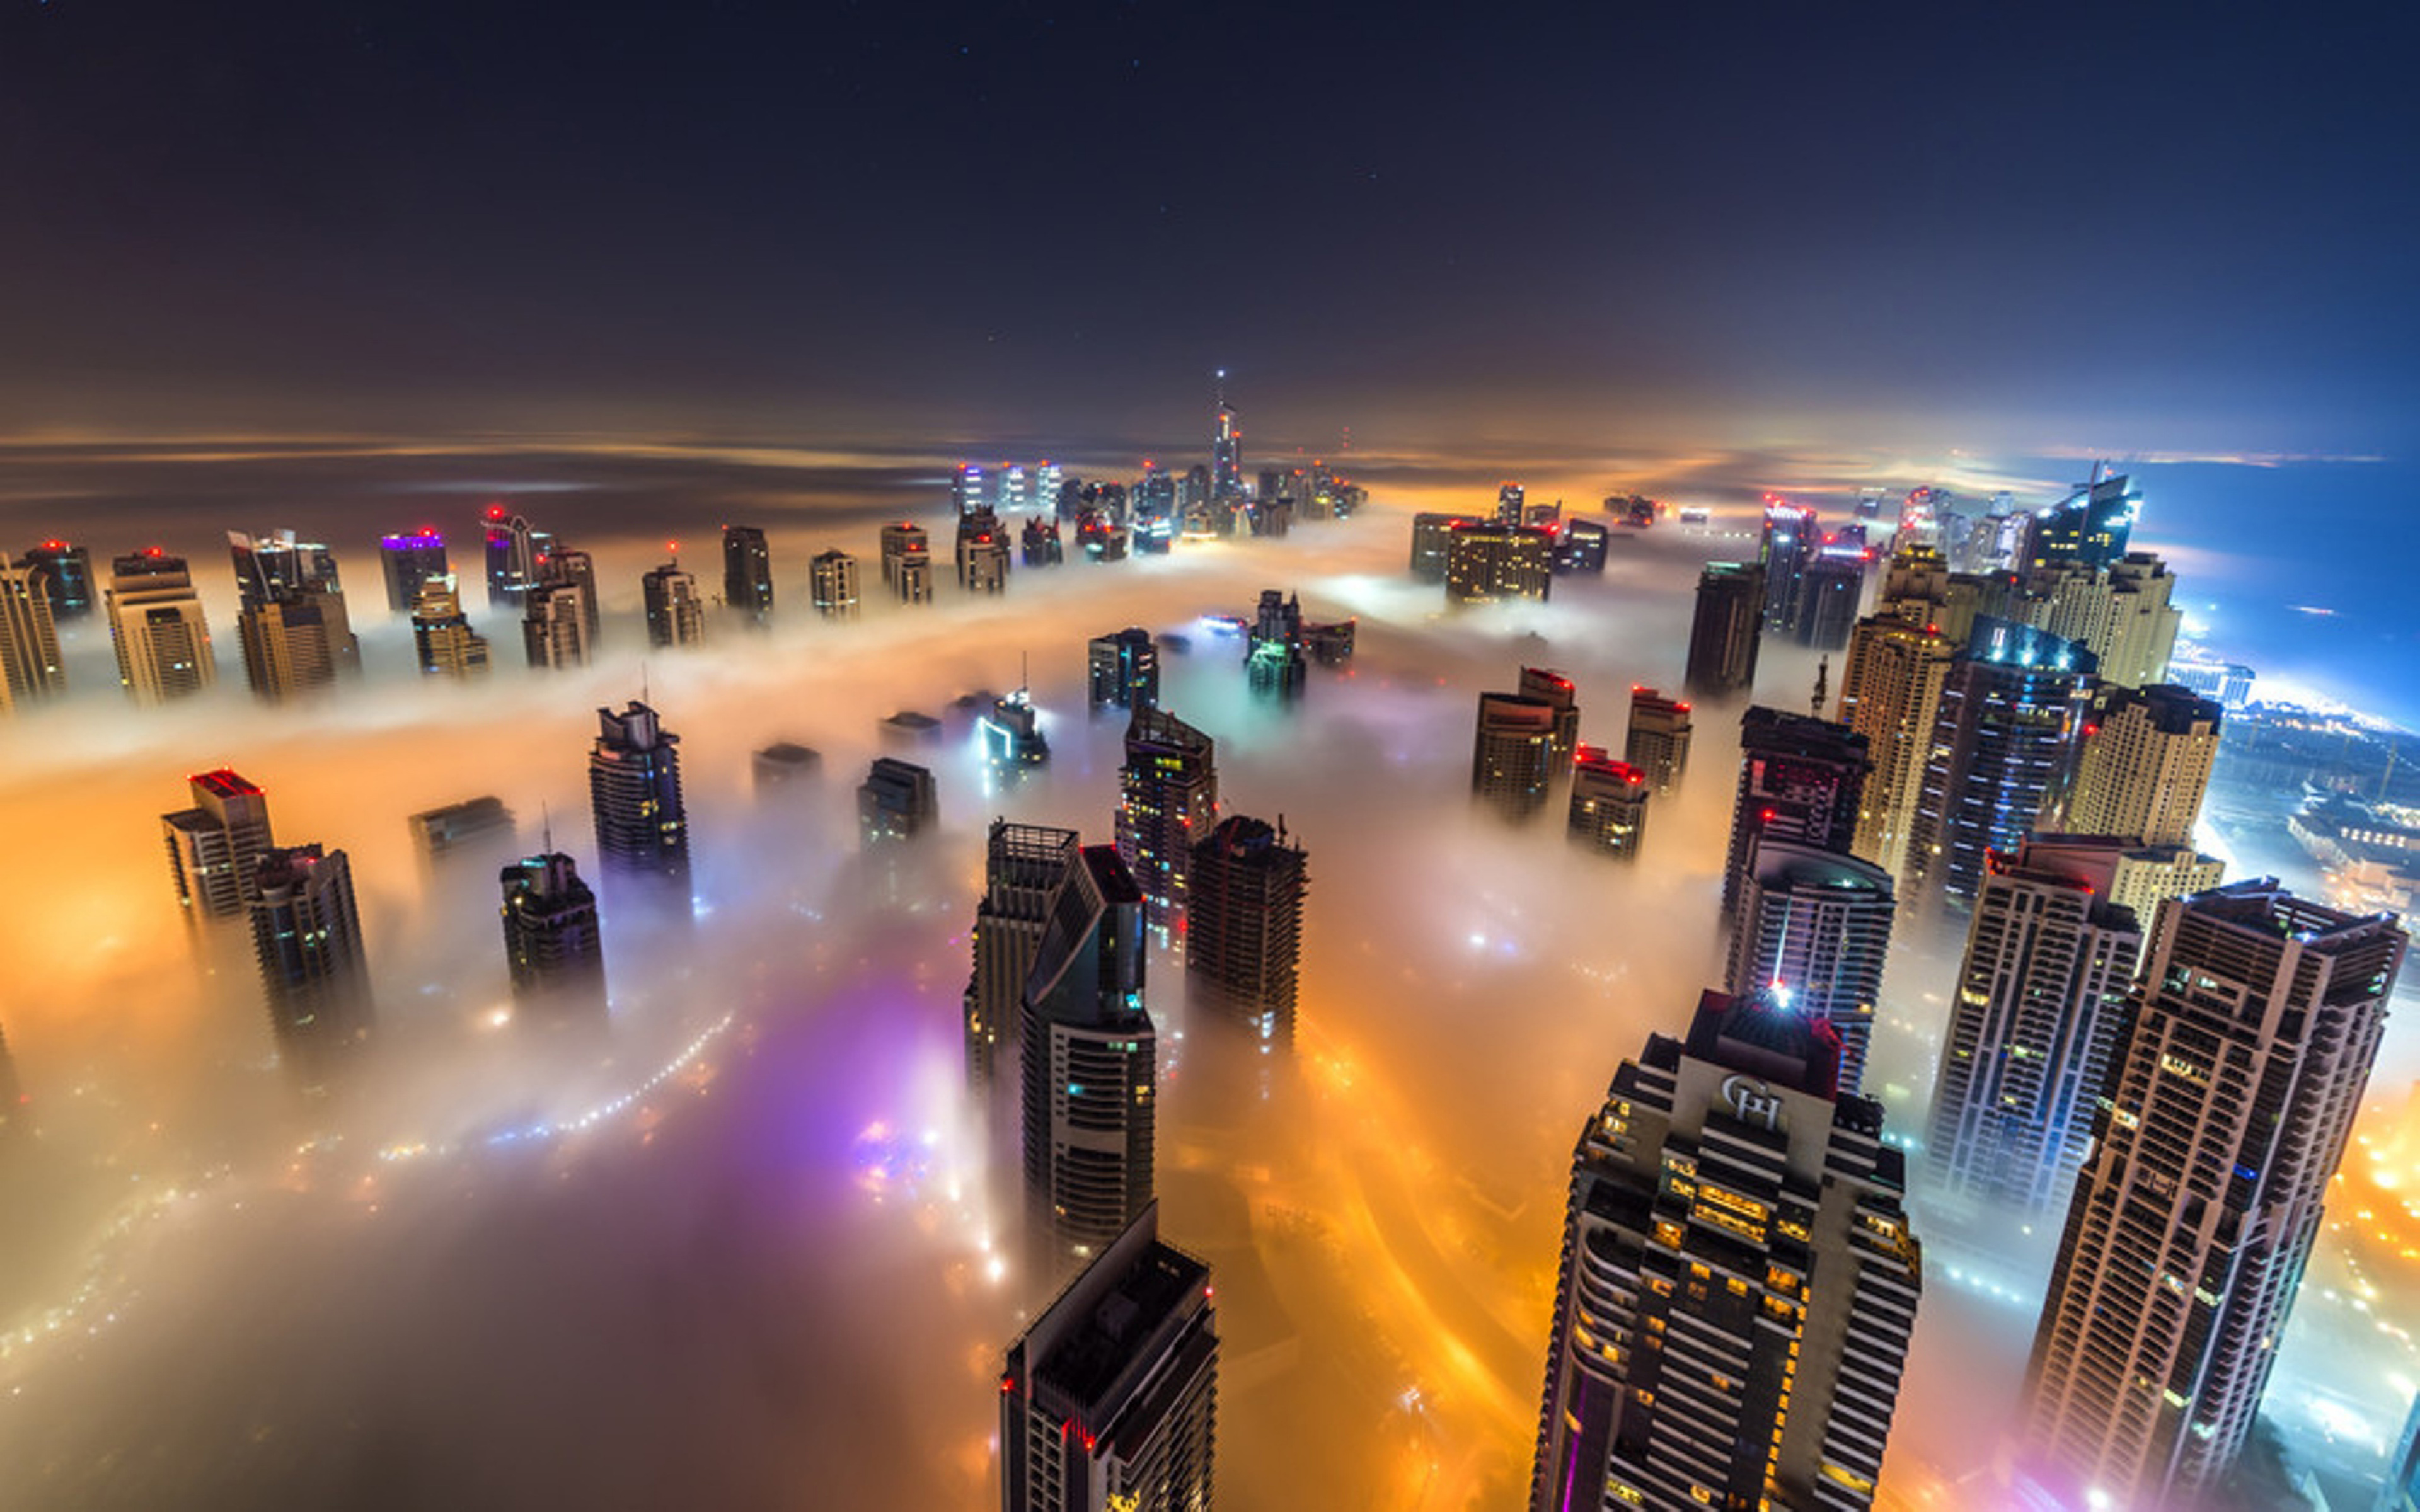 Dubai Night Time City In The Fog Hd Wallpaper : Wallpapers13.com